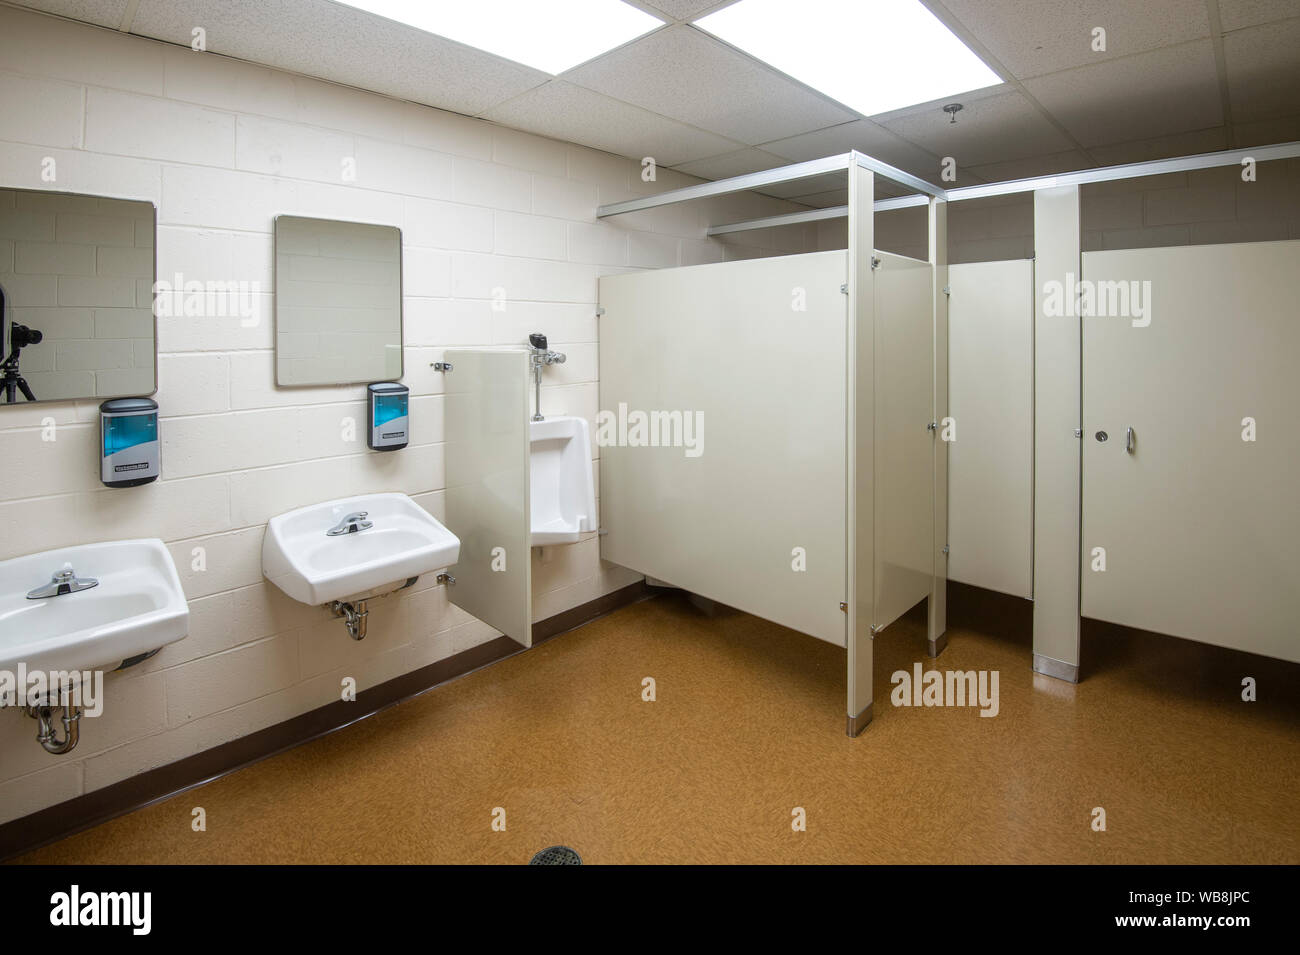 Men's Public Restroom Bathroom, USA Stock Photo